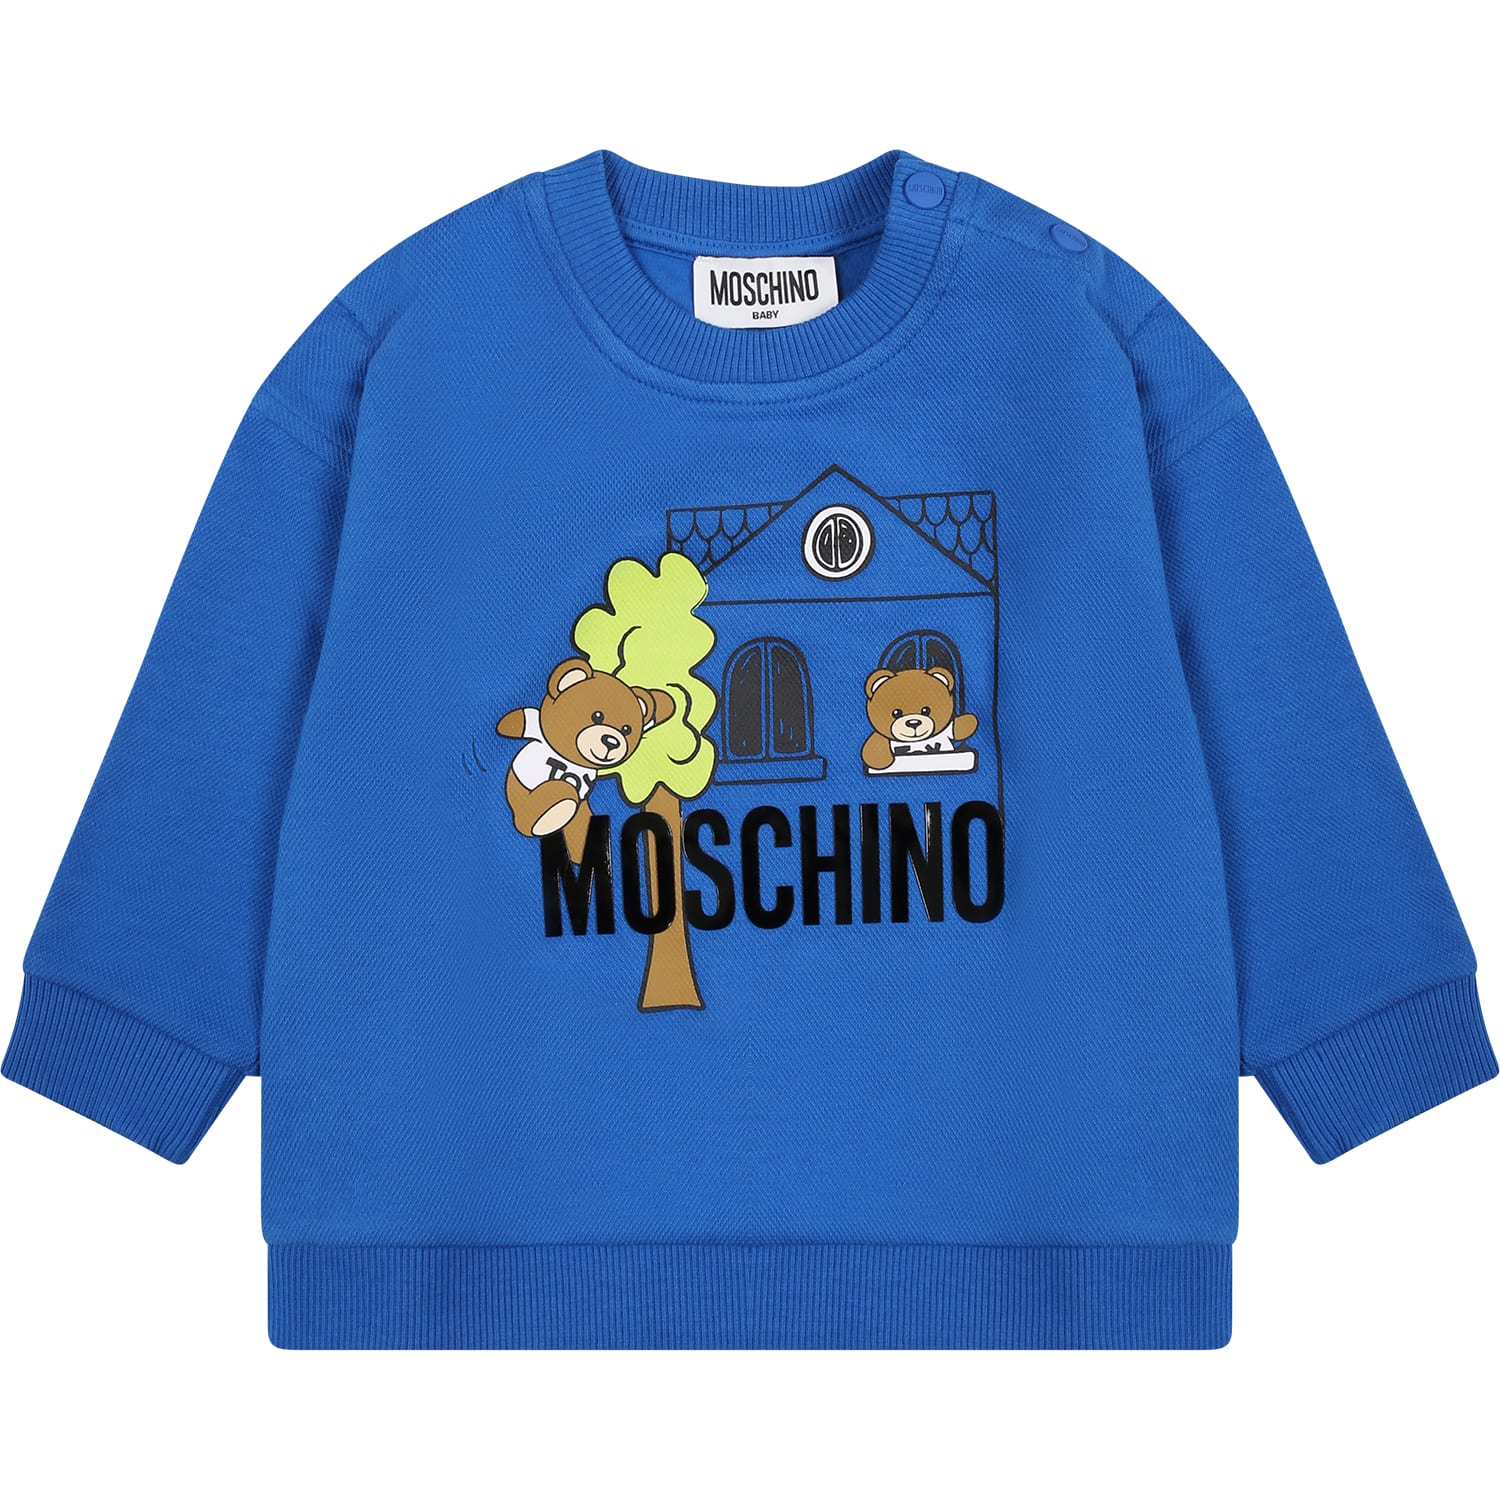 Moschino Kids' Blue Sweatshirt For Baby Boy With Teddy Bears And Logo